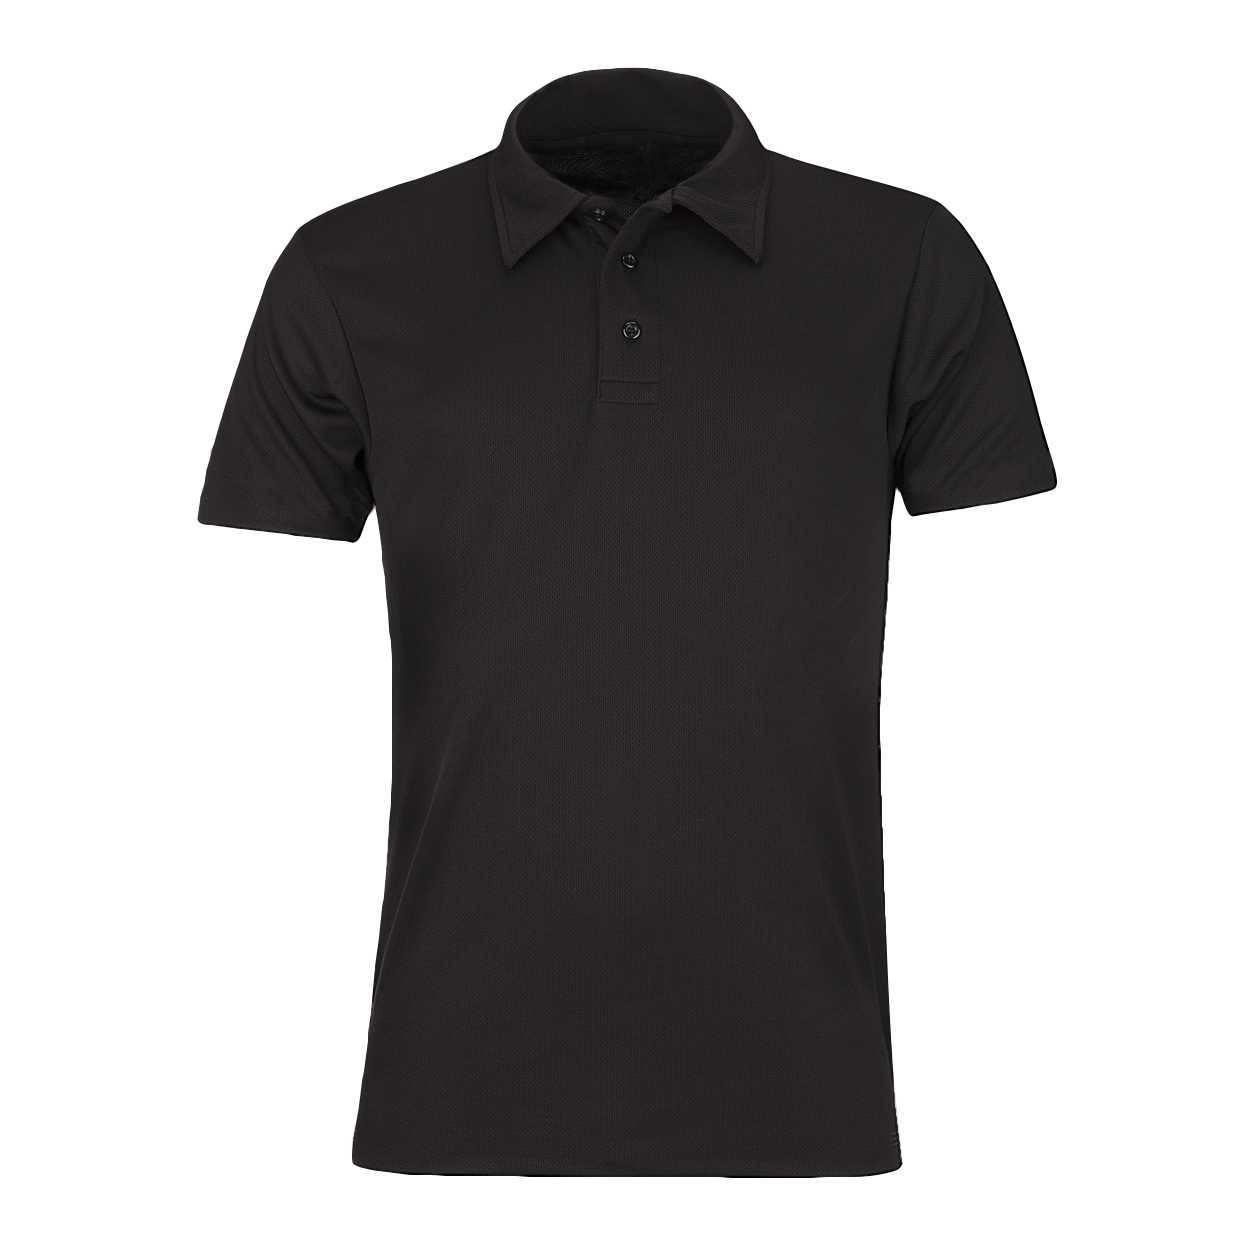 Black Polo Shirt Png - KibrisPDR